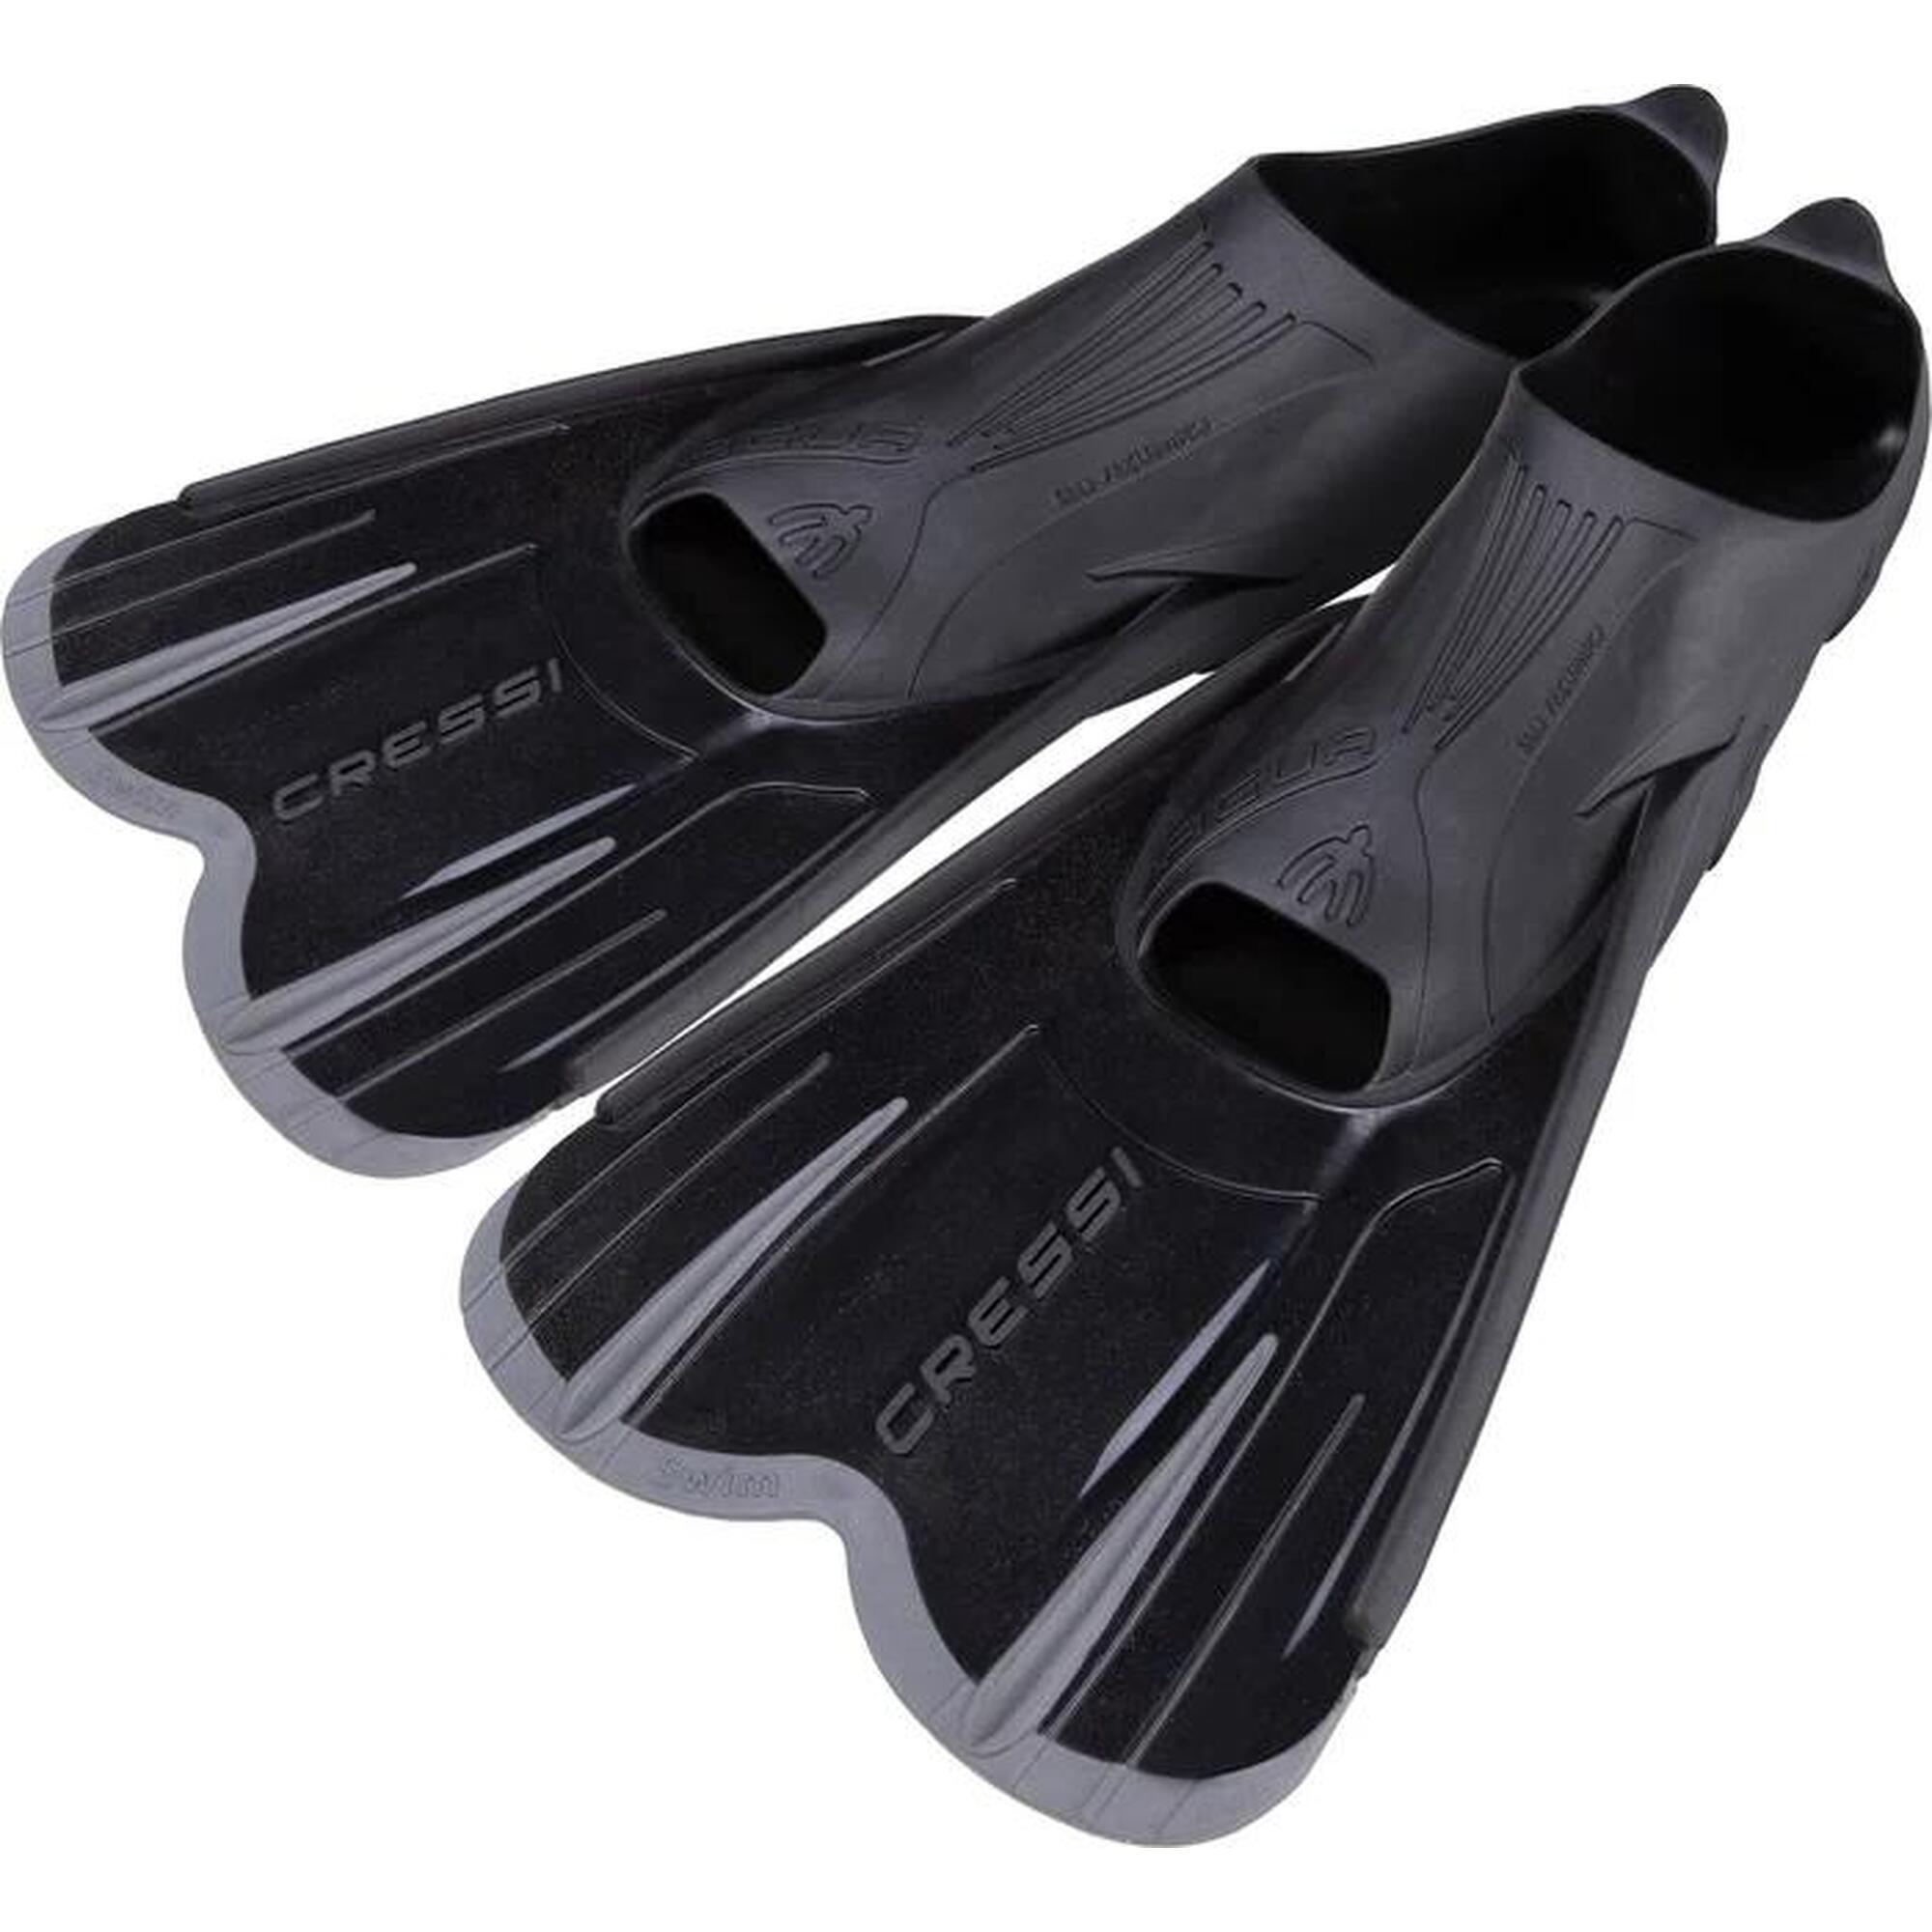 Agua Short Fins Short blade swimming fins - Black 37/38